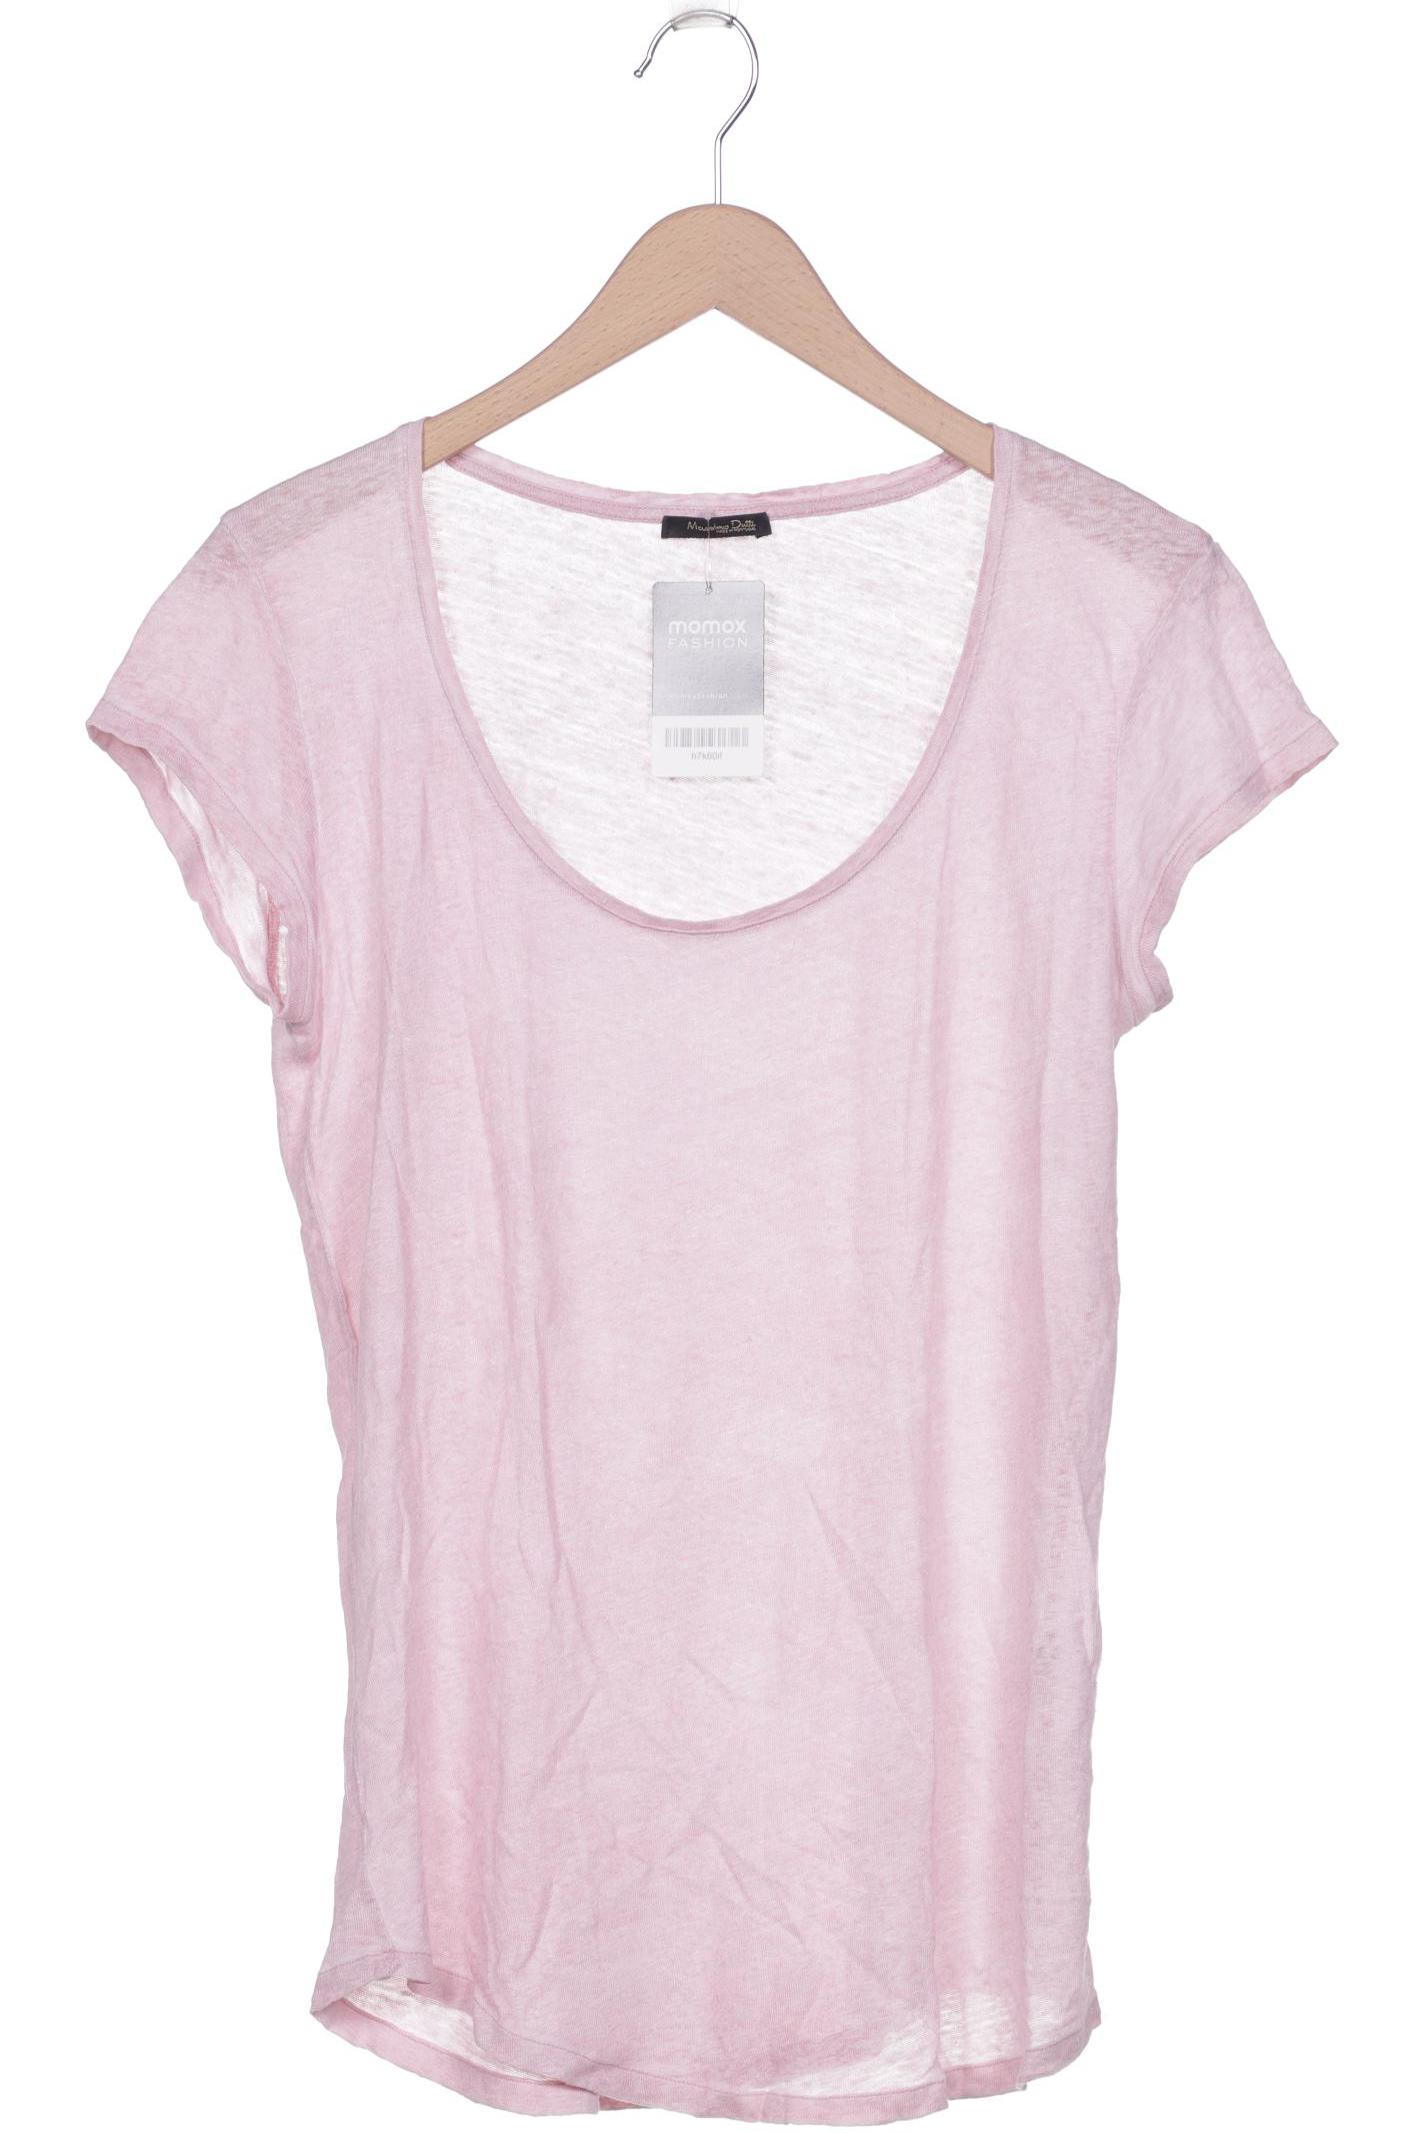 Massimo Dutti Damen T-Shirt, pink von Massimo Dutti